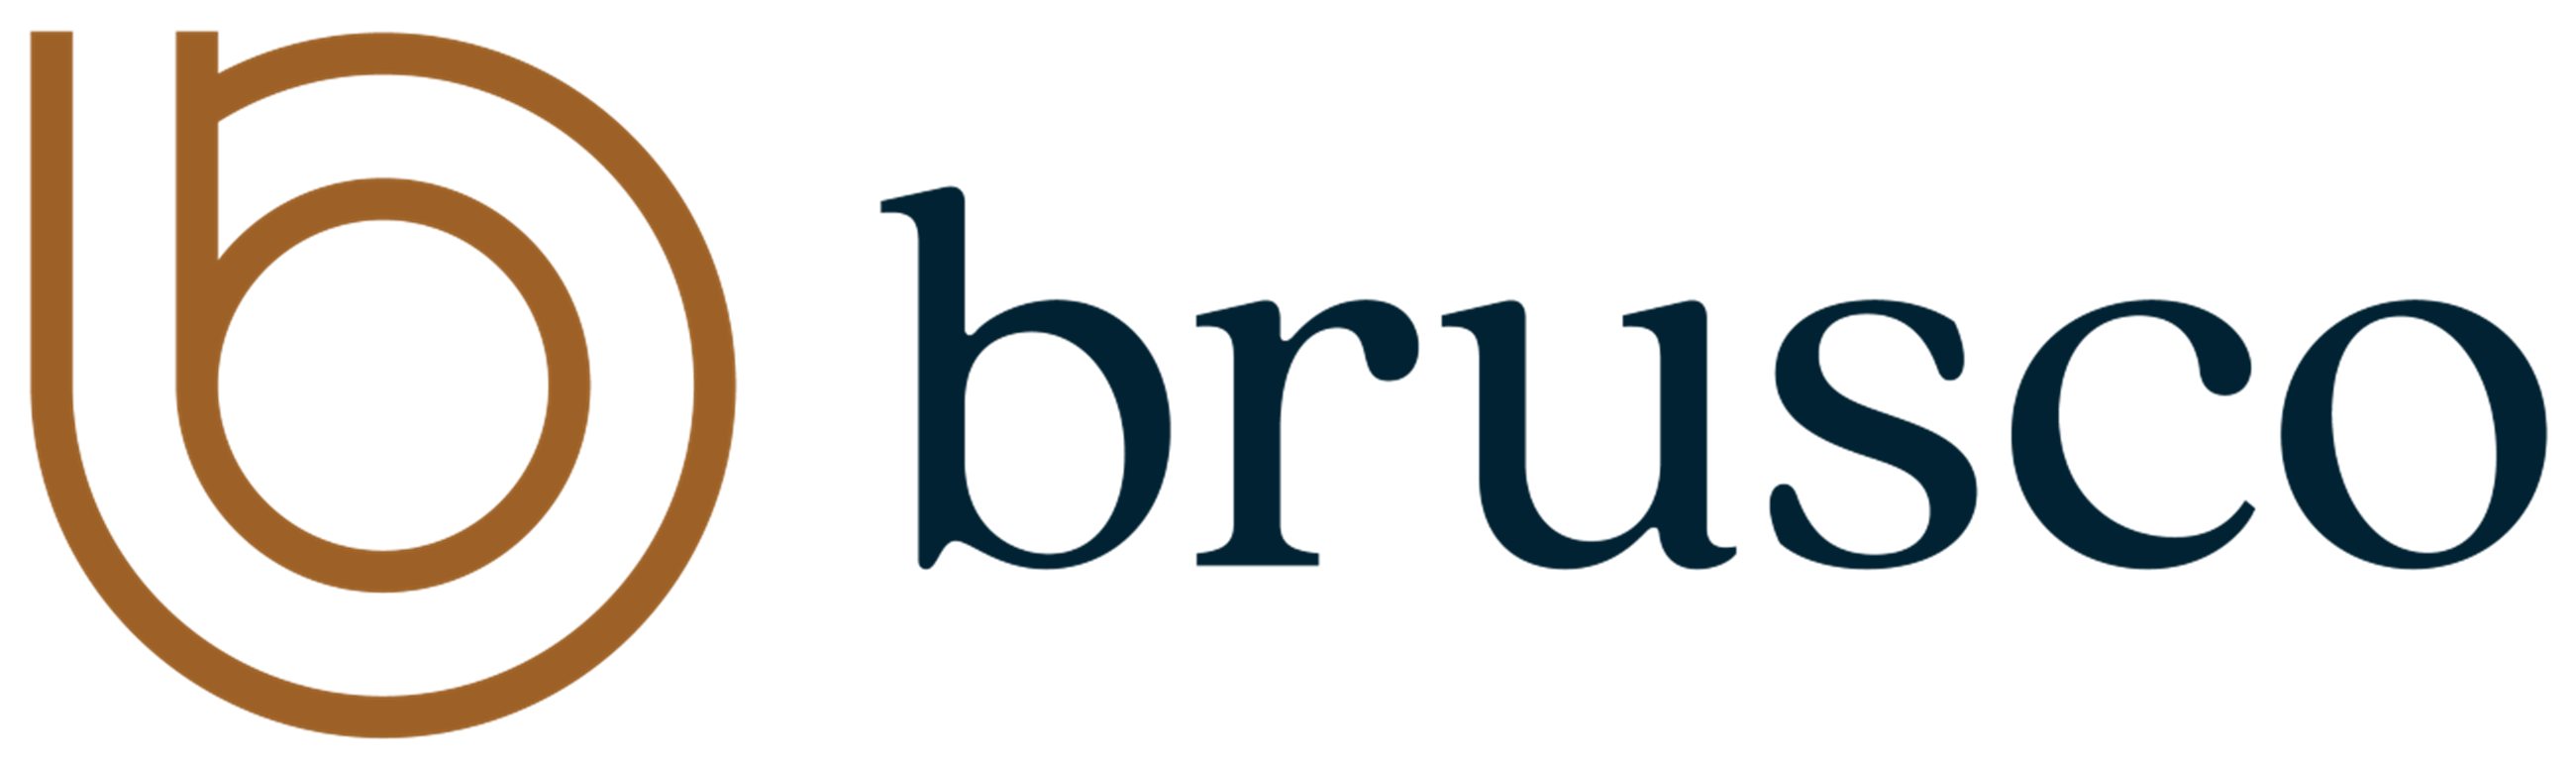 Brusco Food Group Logo